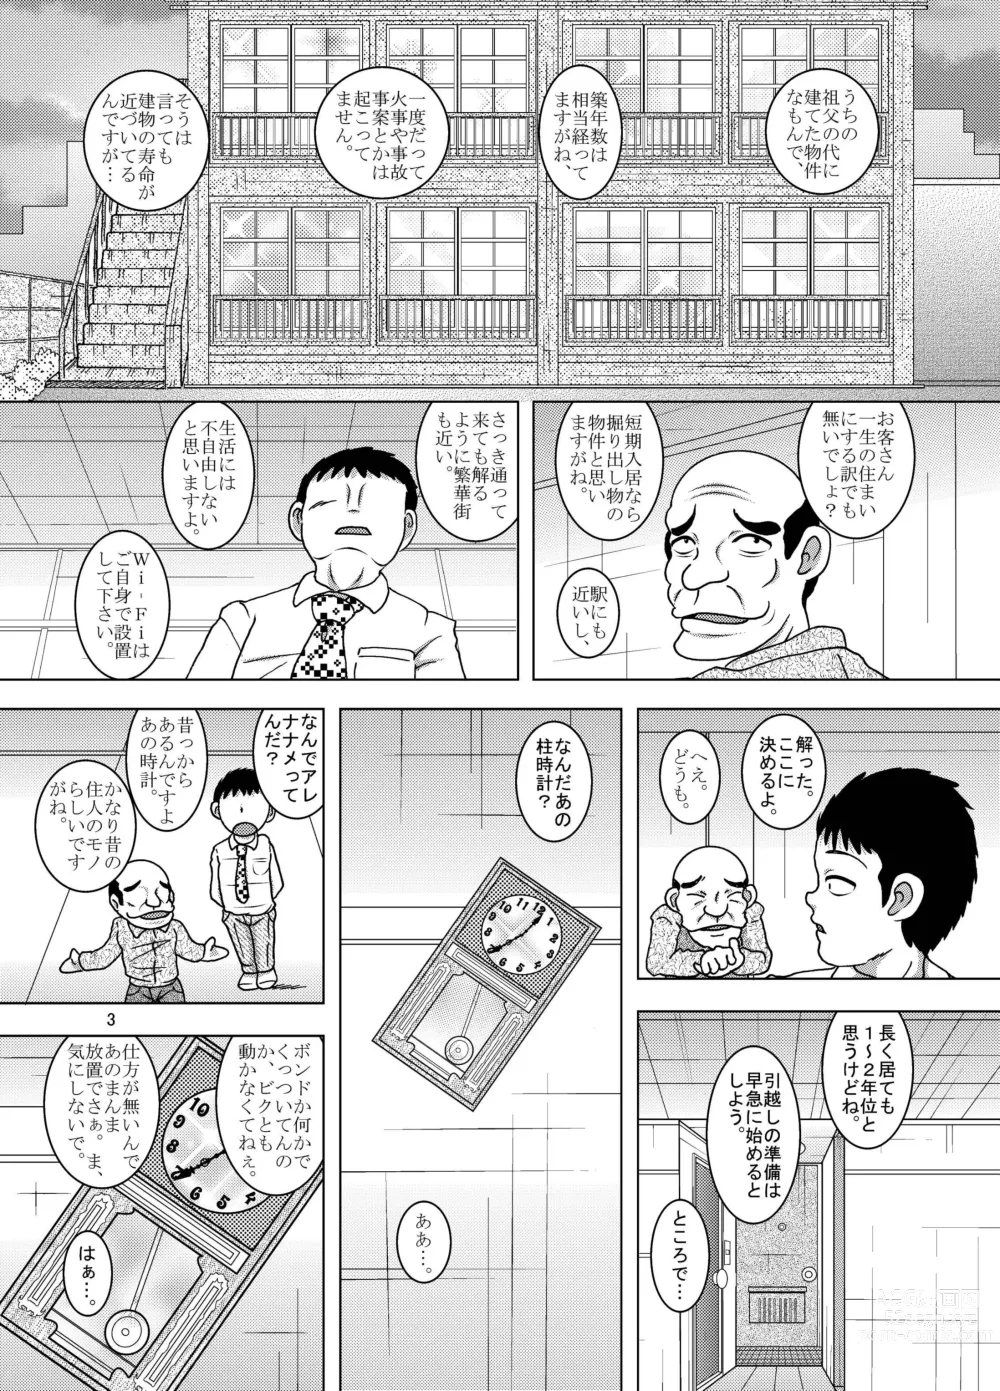 Page 3 of doujinshi Hoko Kankan